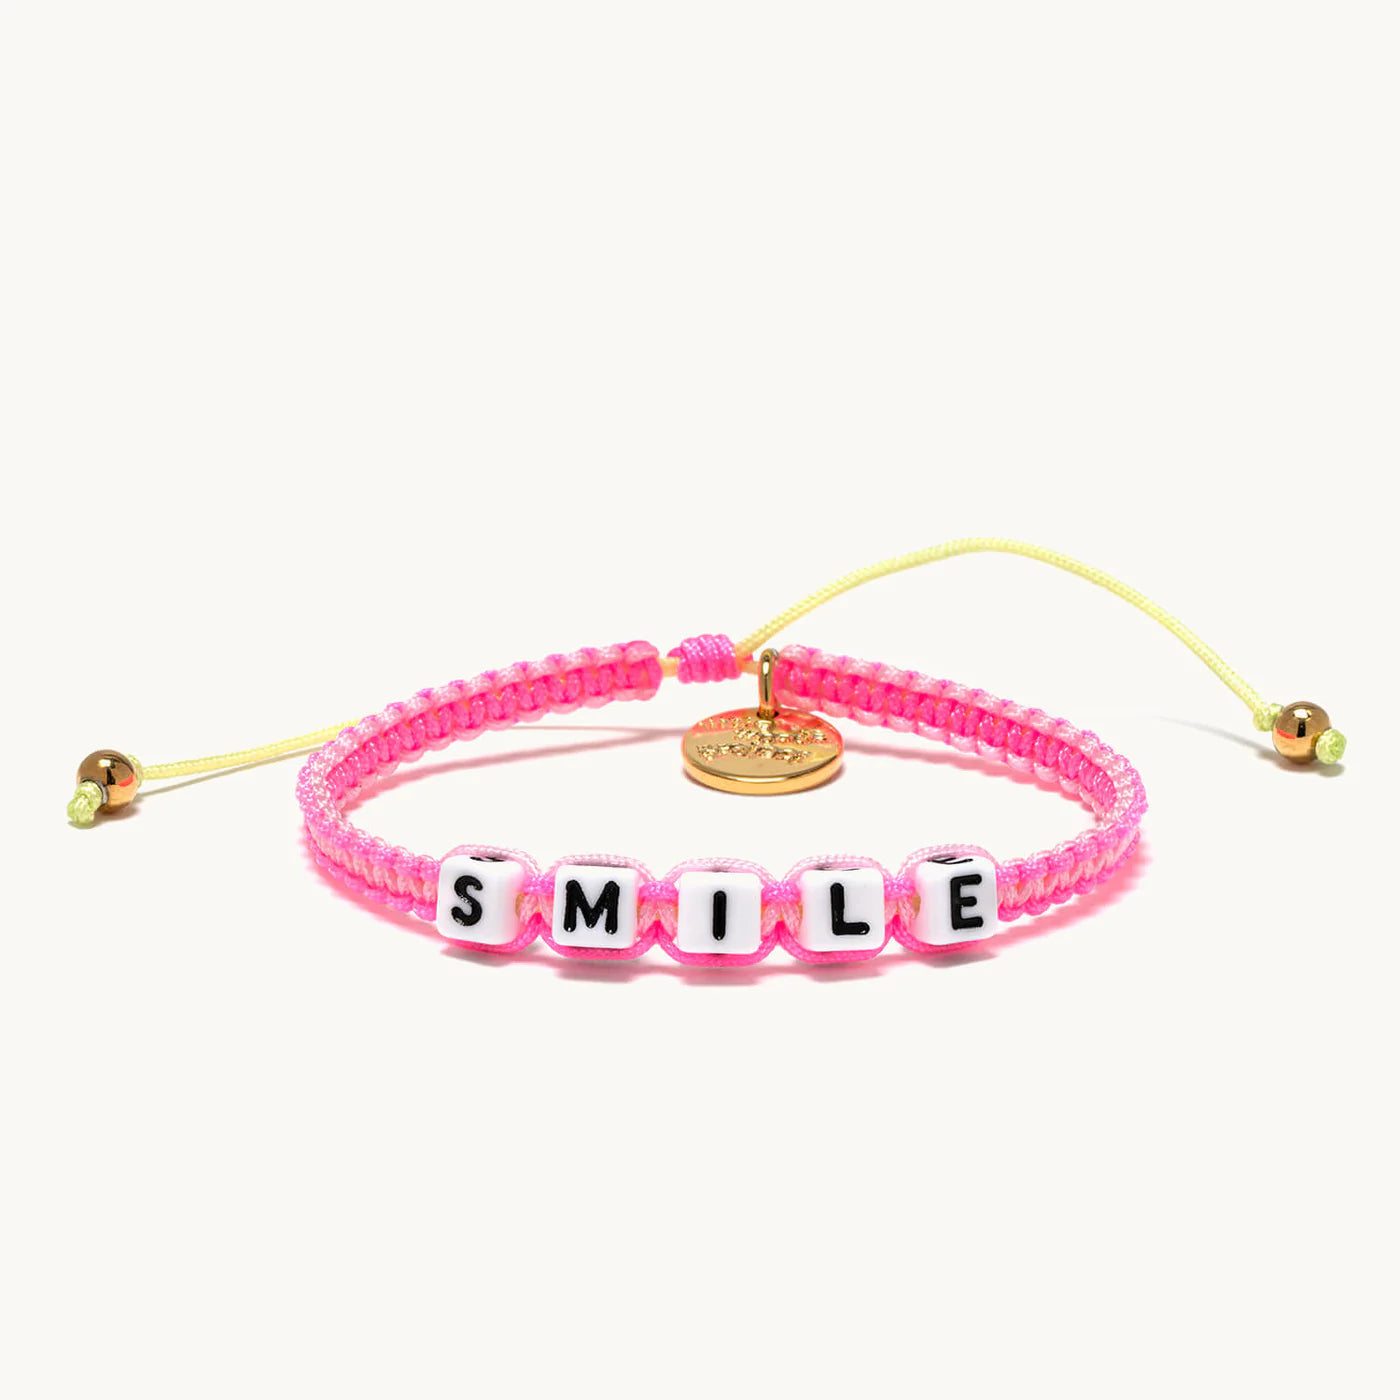 Smile / Little Words Project Woven Bracelet